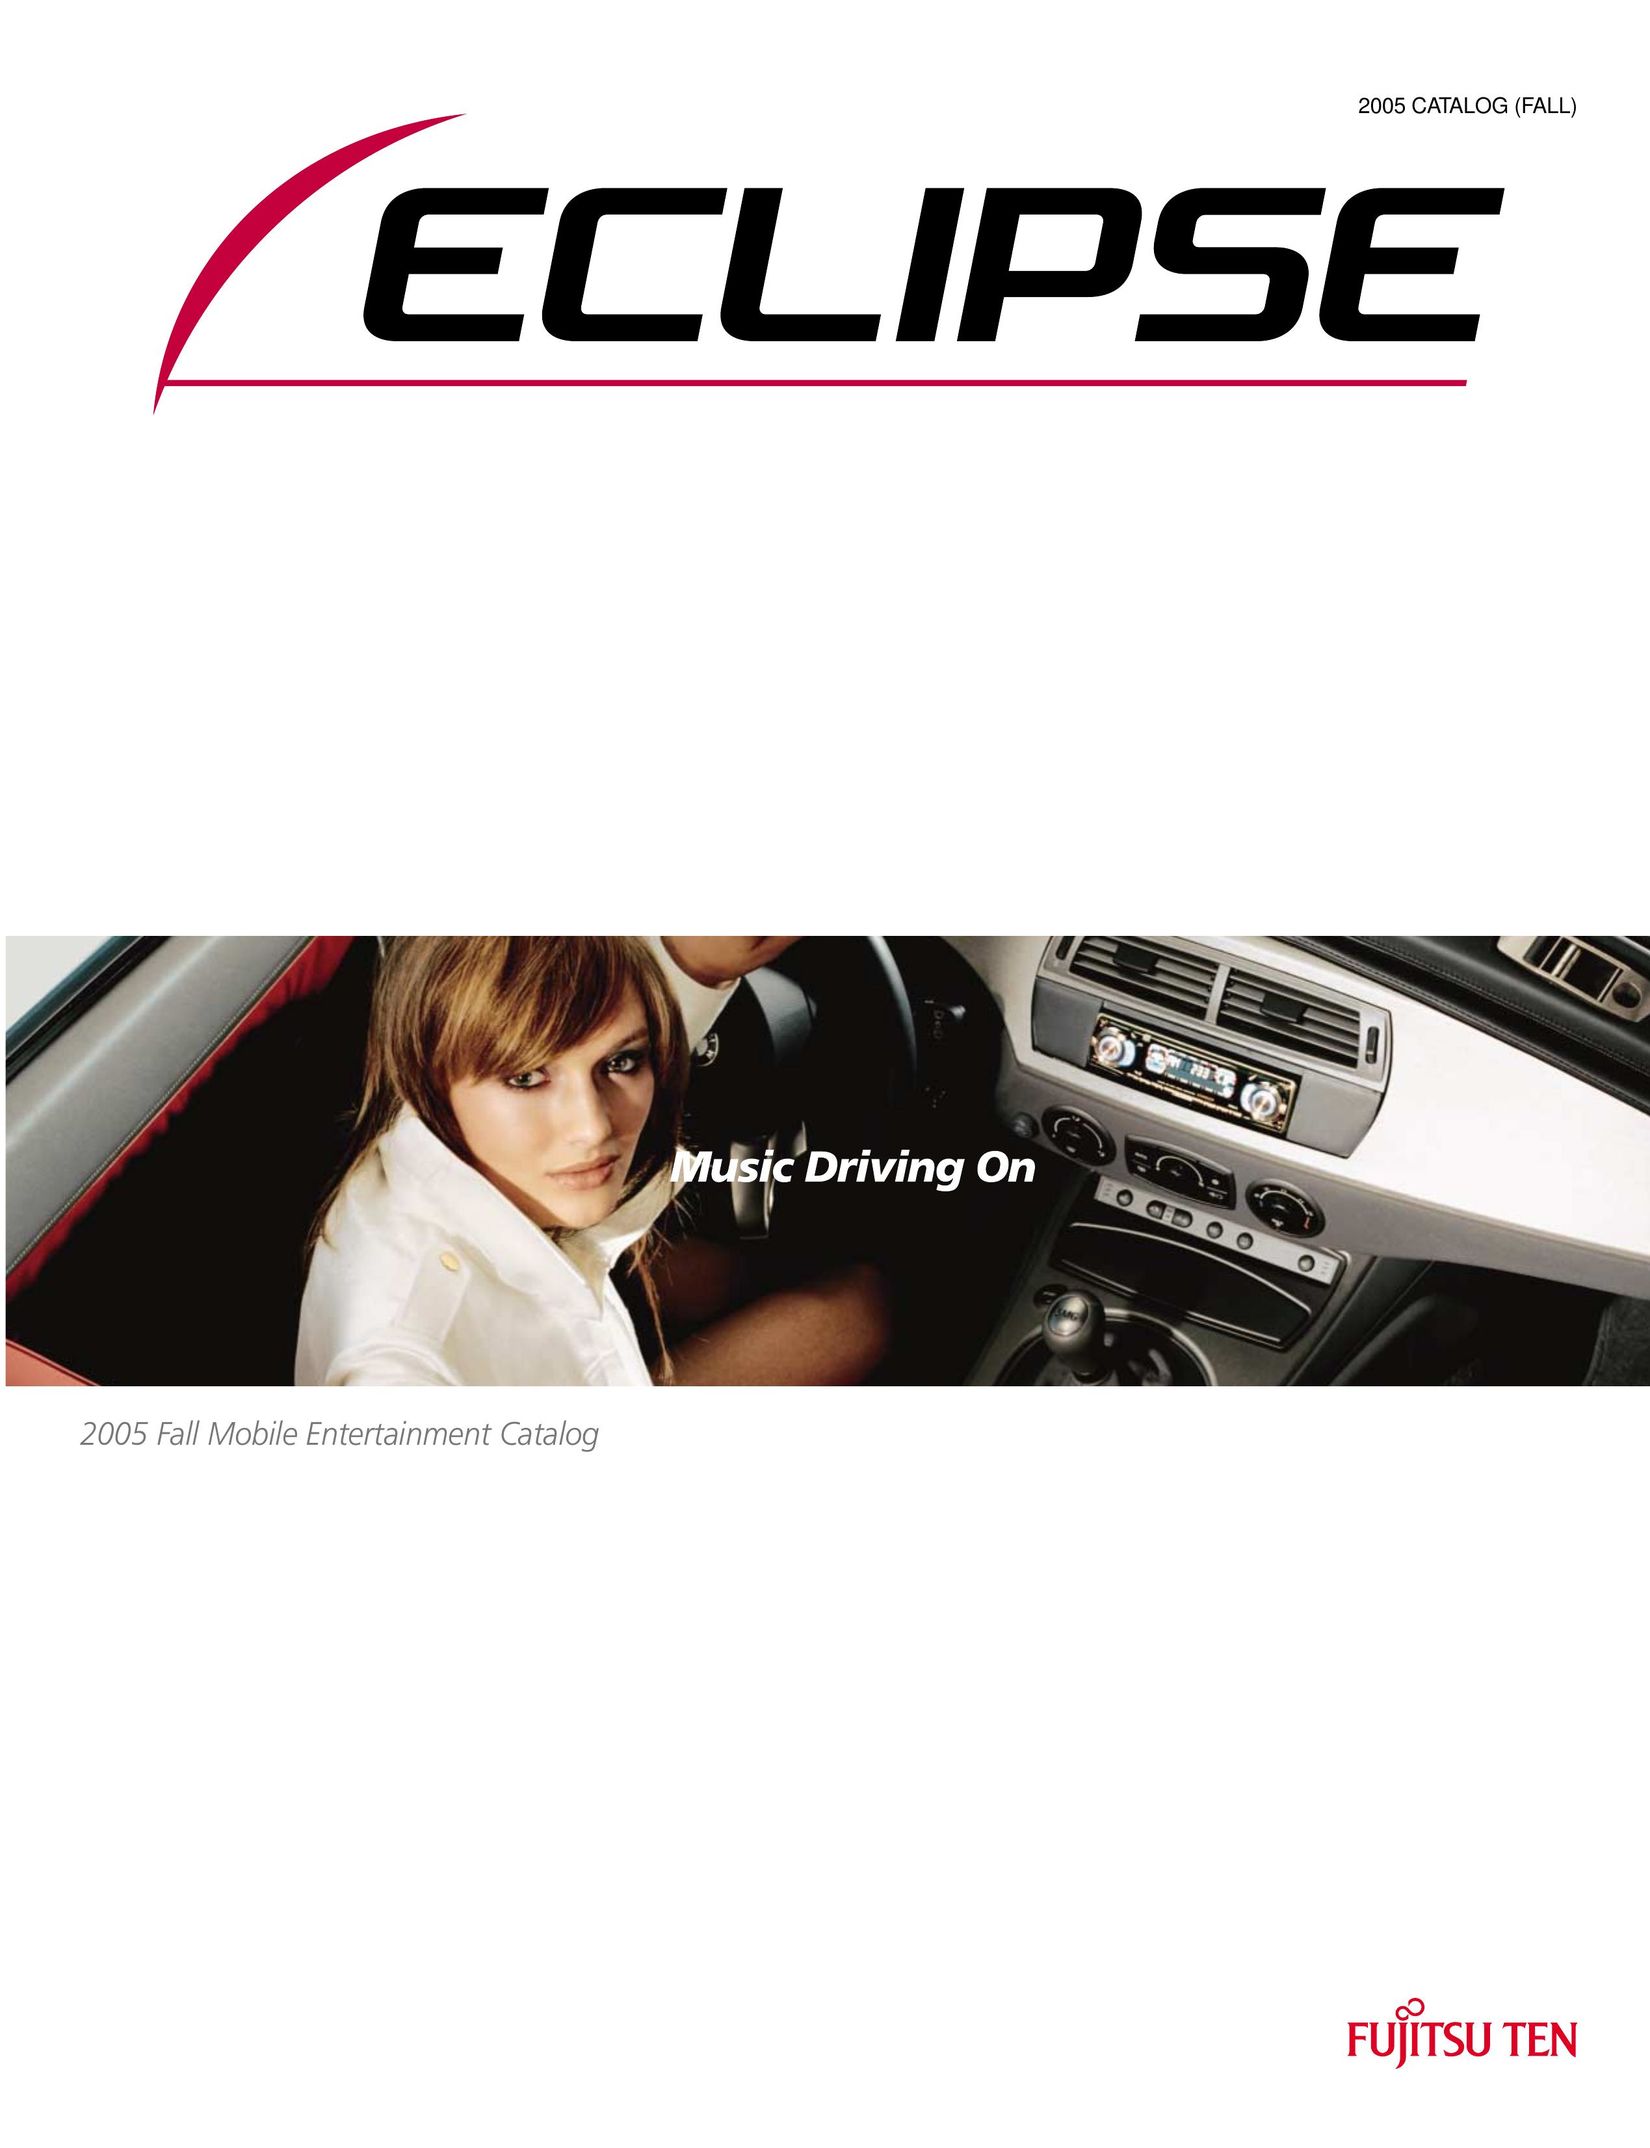 Eclipse - Fujitsu Ten AVX5000 MP3 Player User Manual